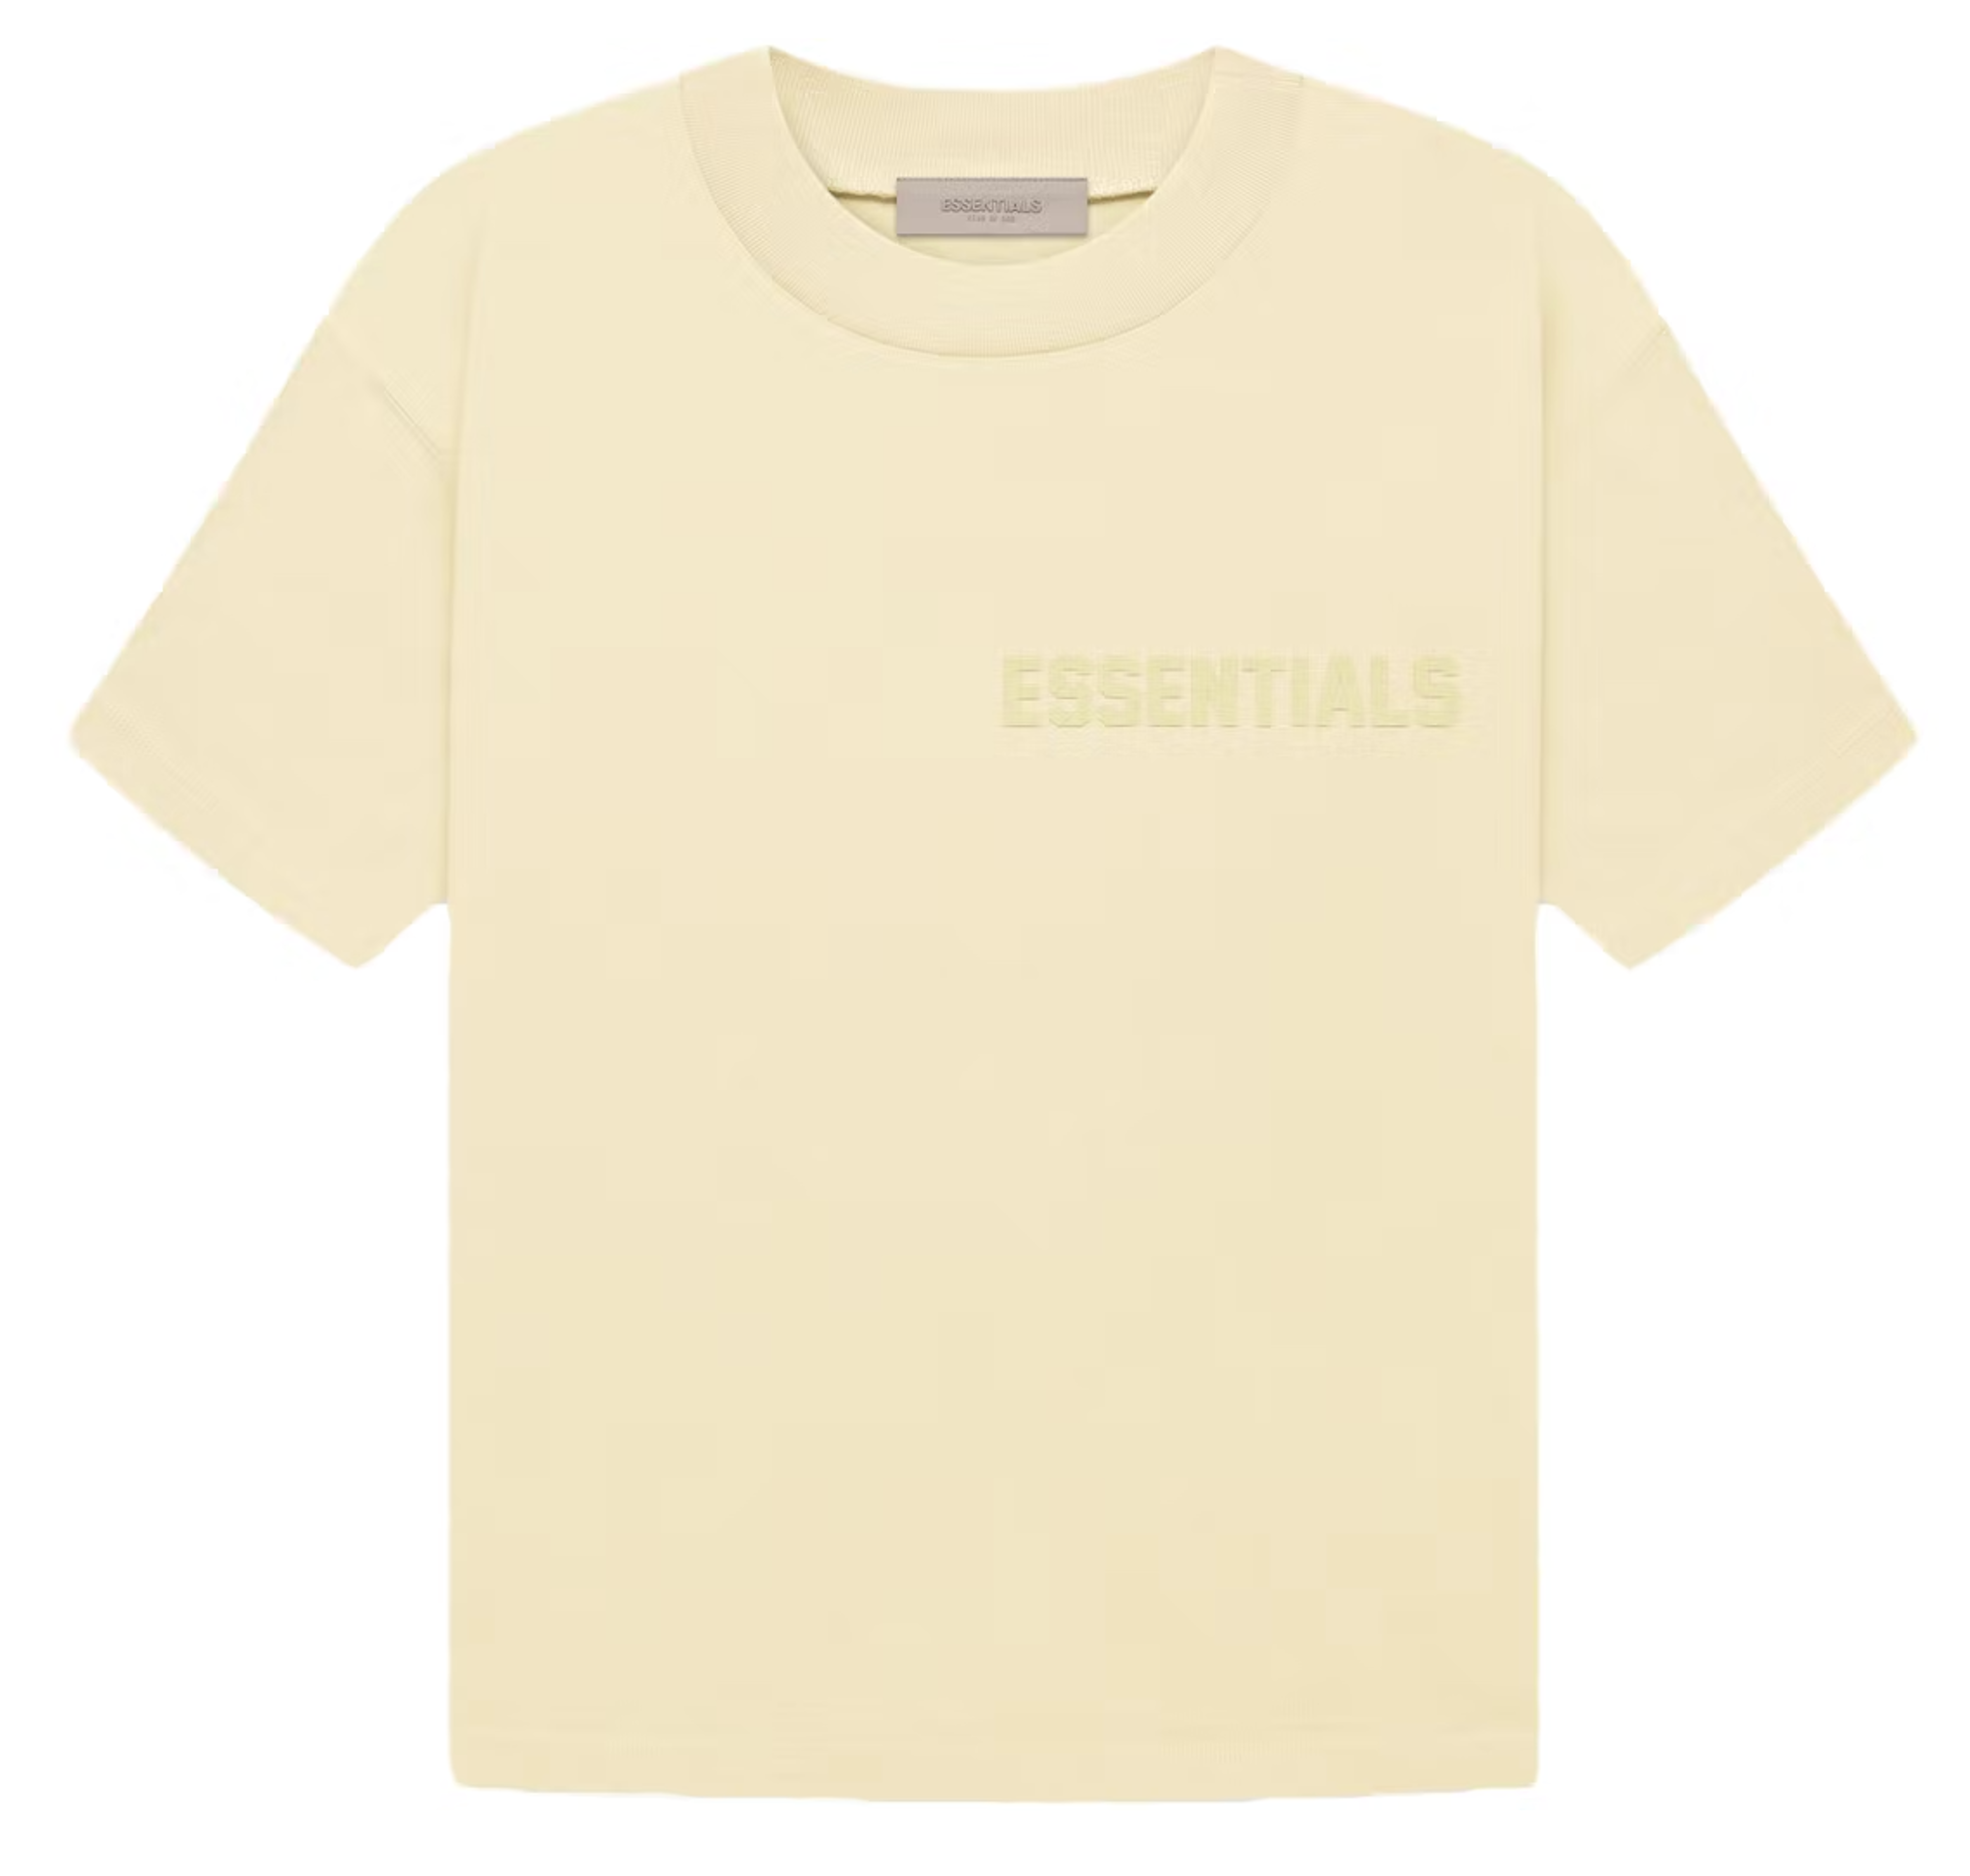 Fear of God Essentials Short Sleeve Tee Shirt Canary